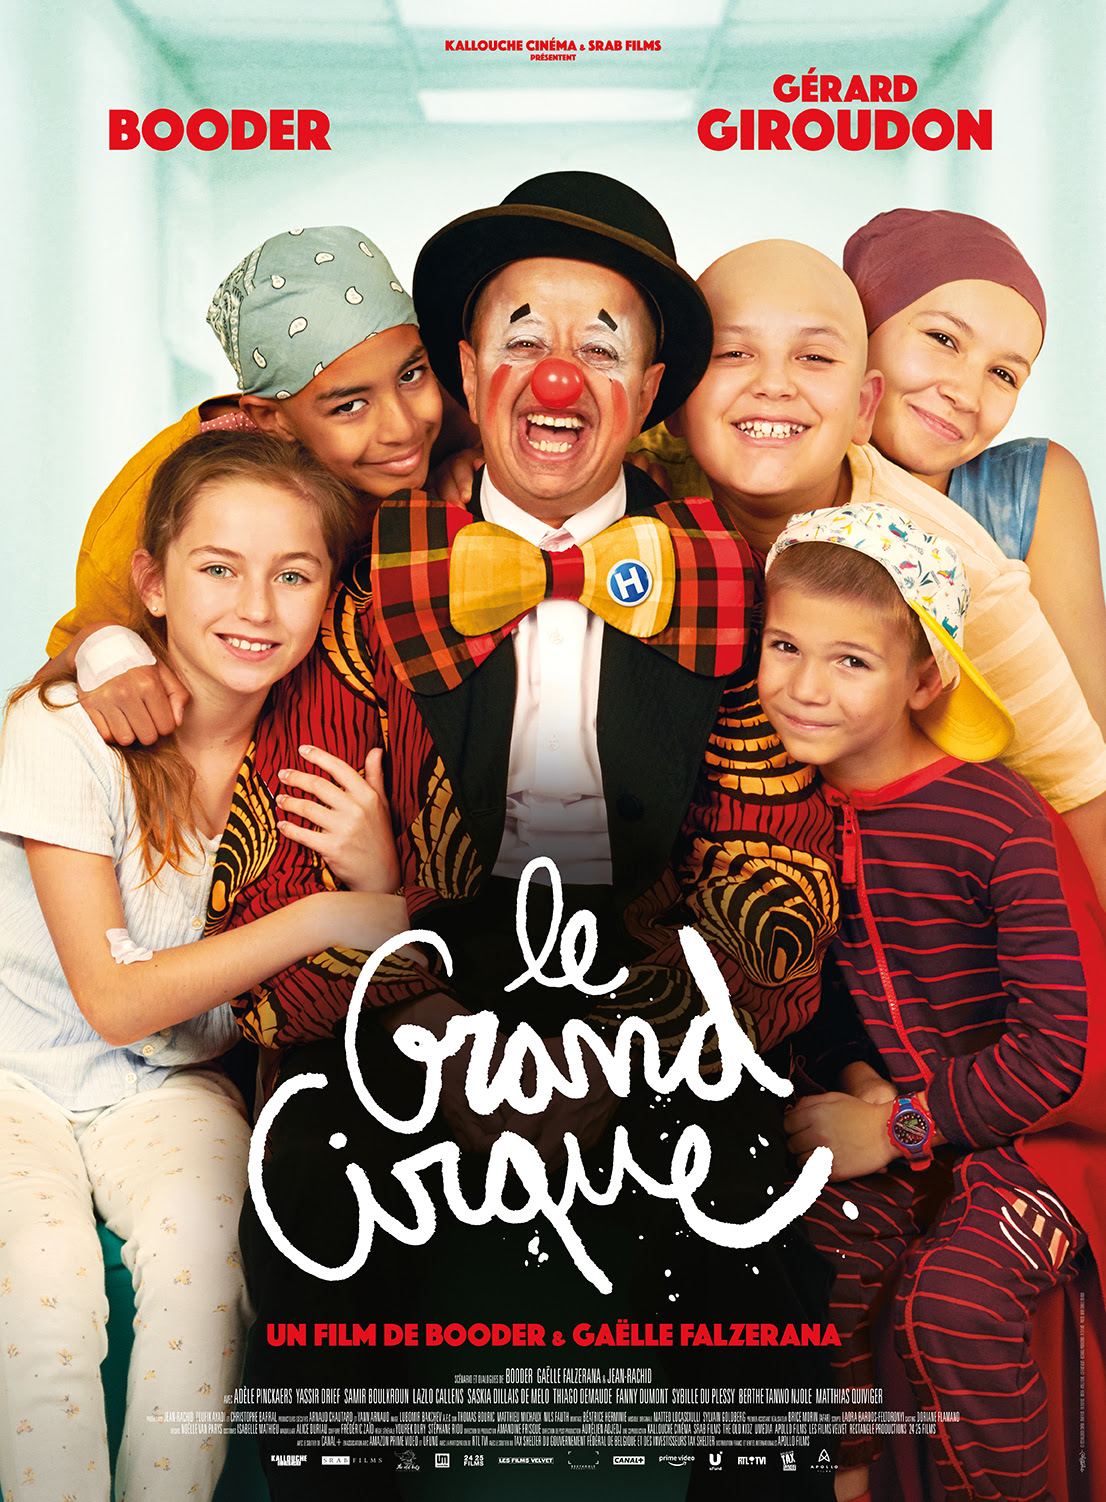 Le Grand cirque - Réalisateur Booder, Gaelle Falzerana